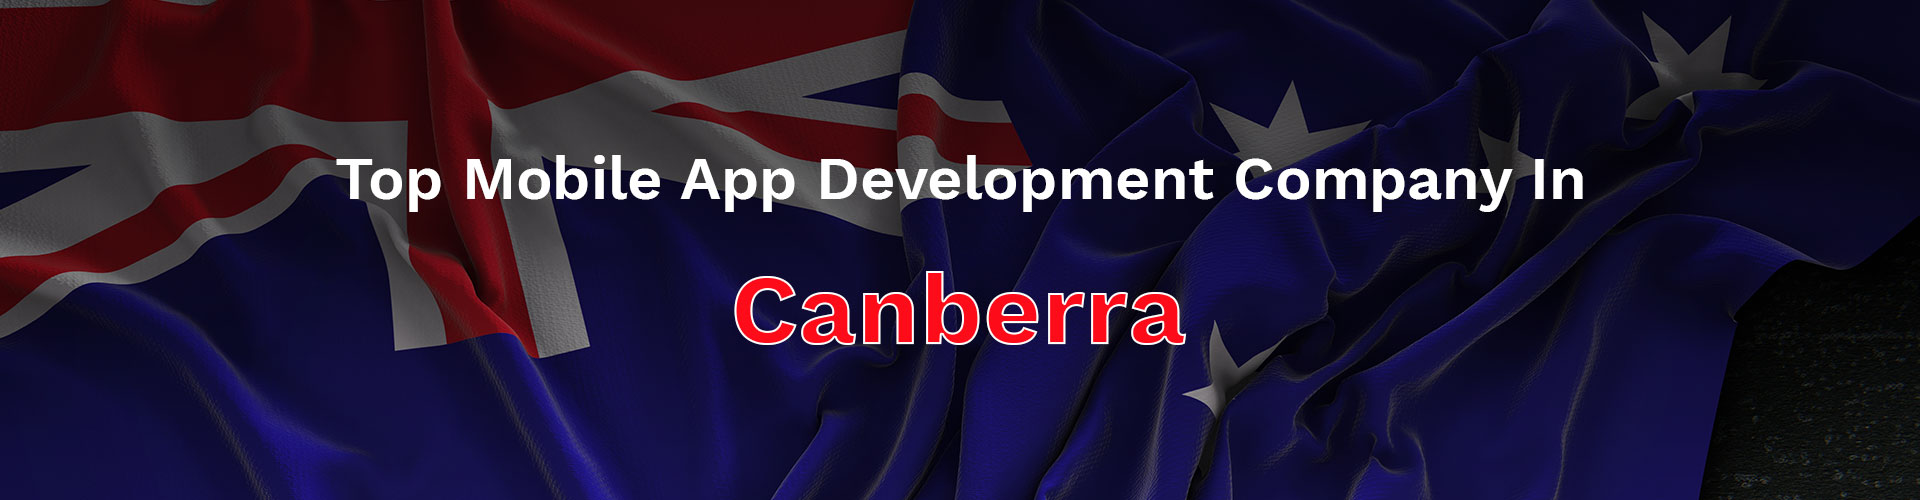 mobile app development company canberra